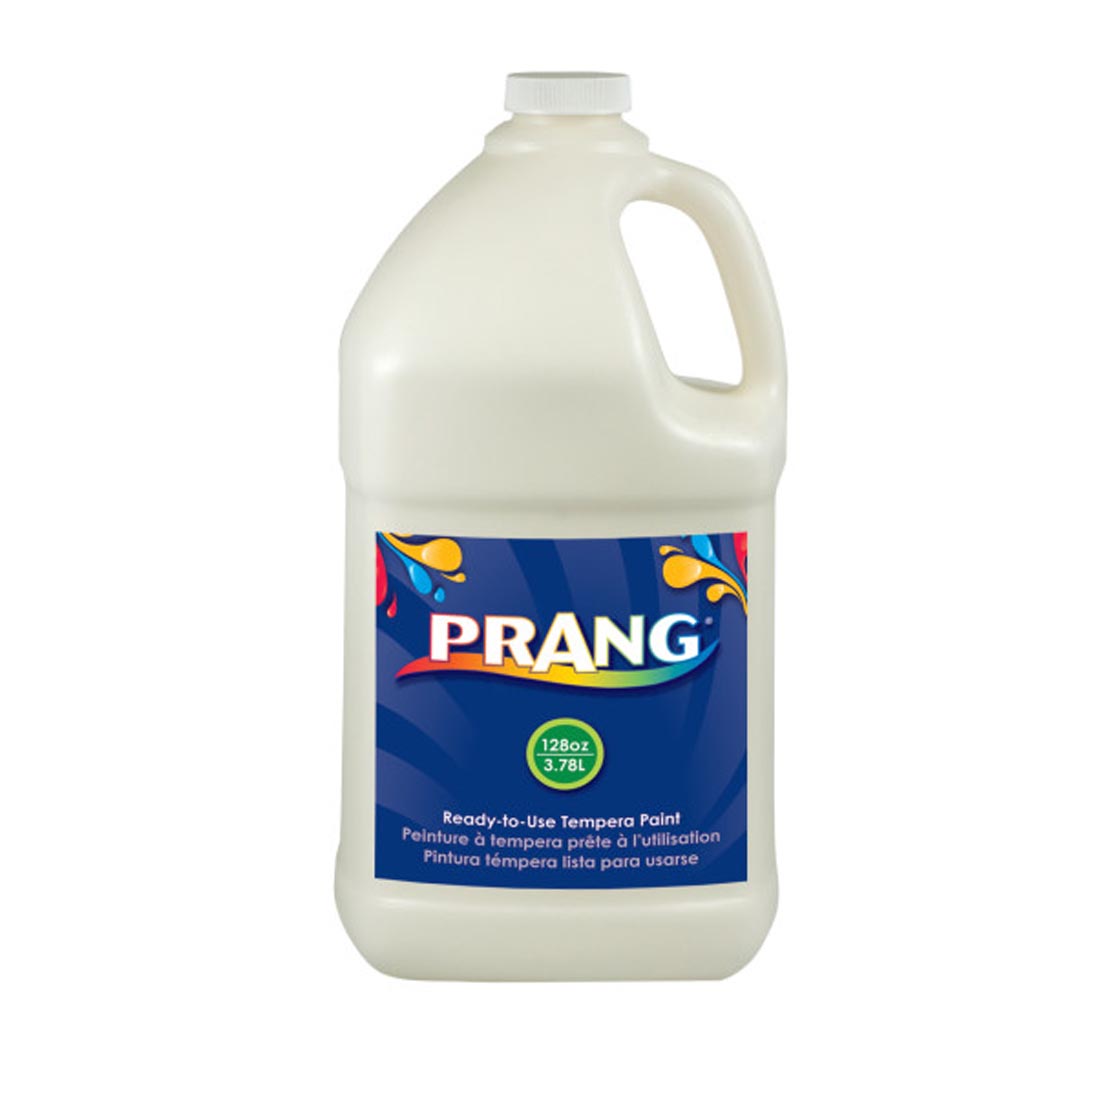 Gallon Jug of White Prang Ready-To-Use Tempera Paint